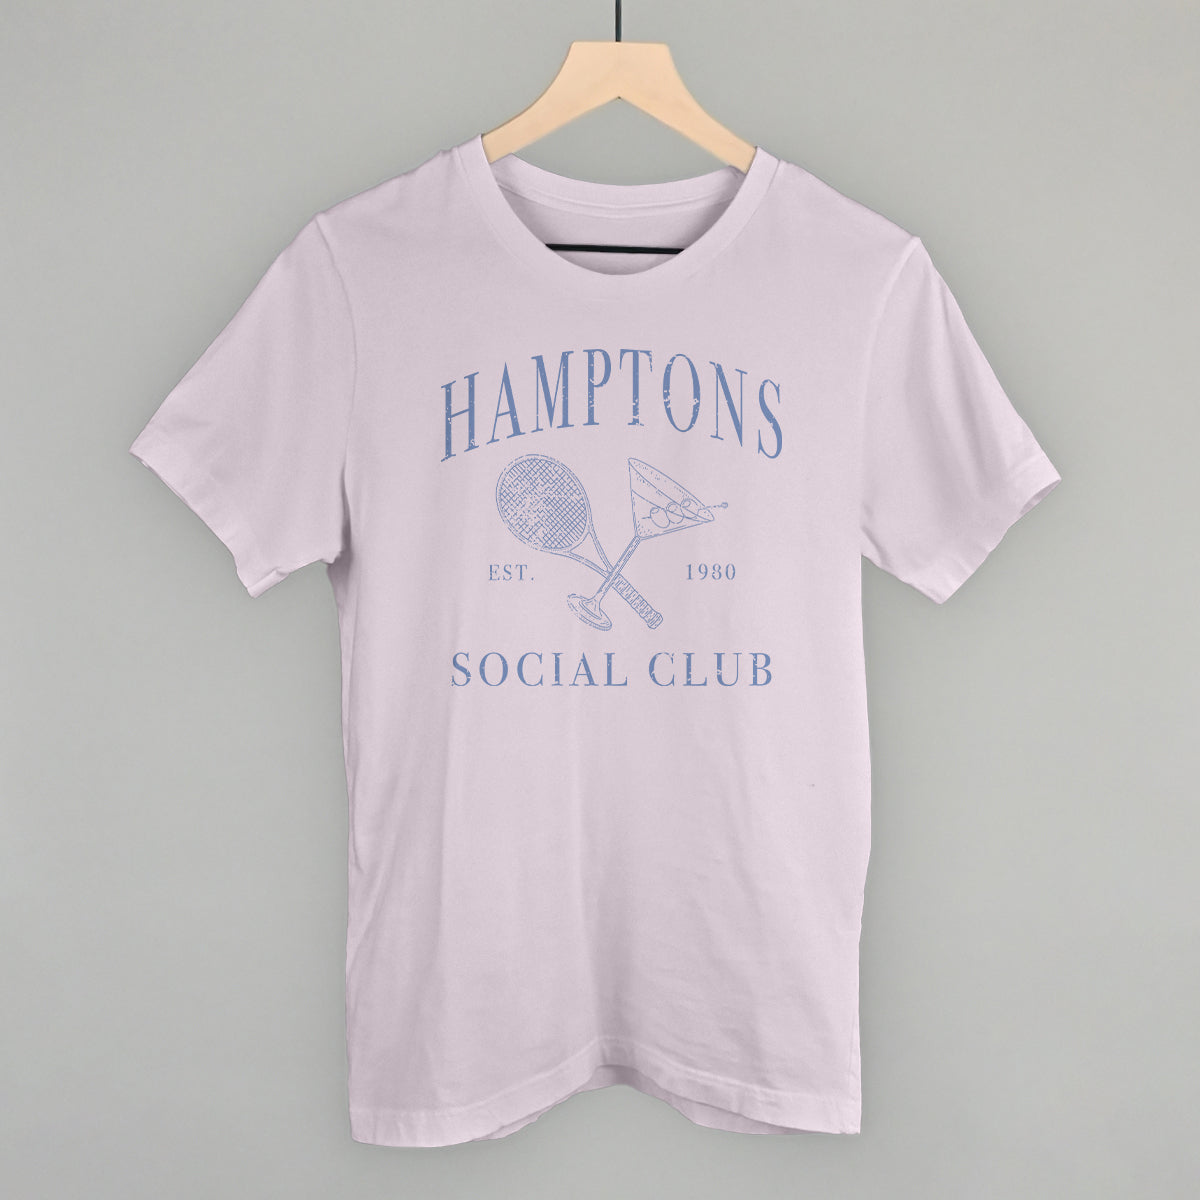 Hamptons Social Club